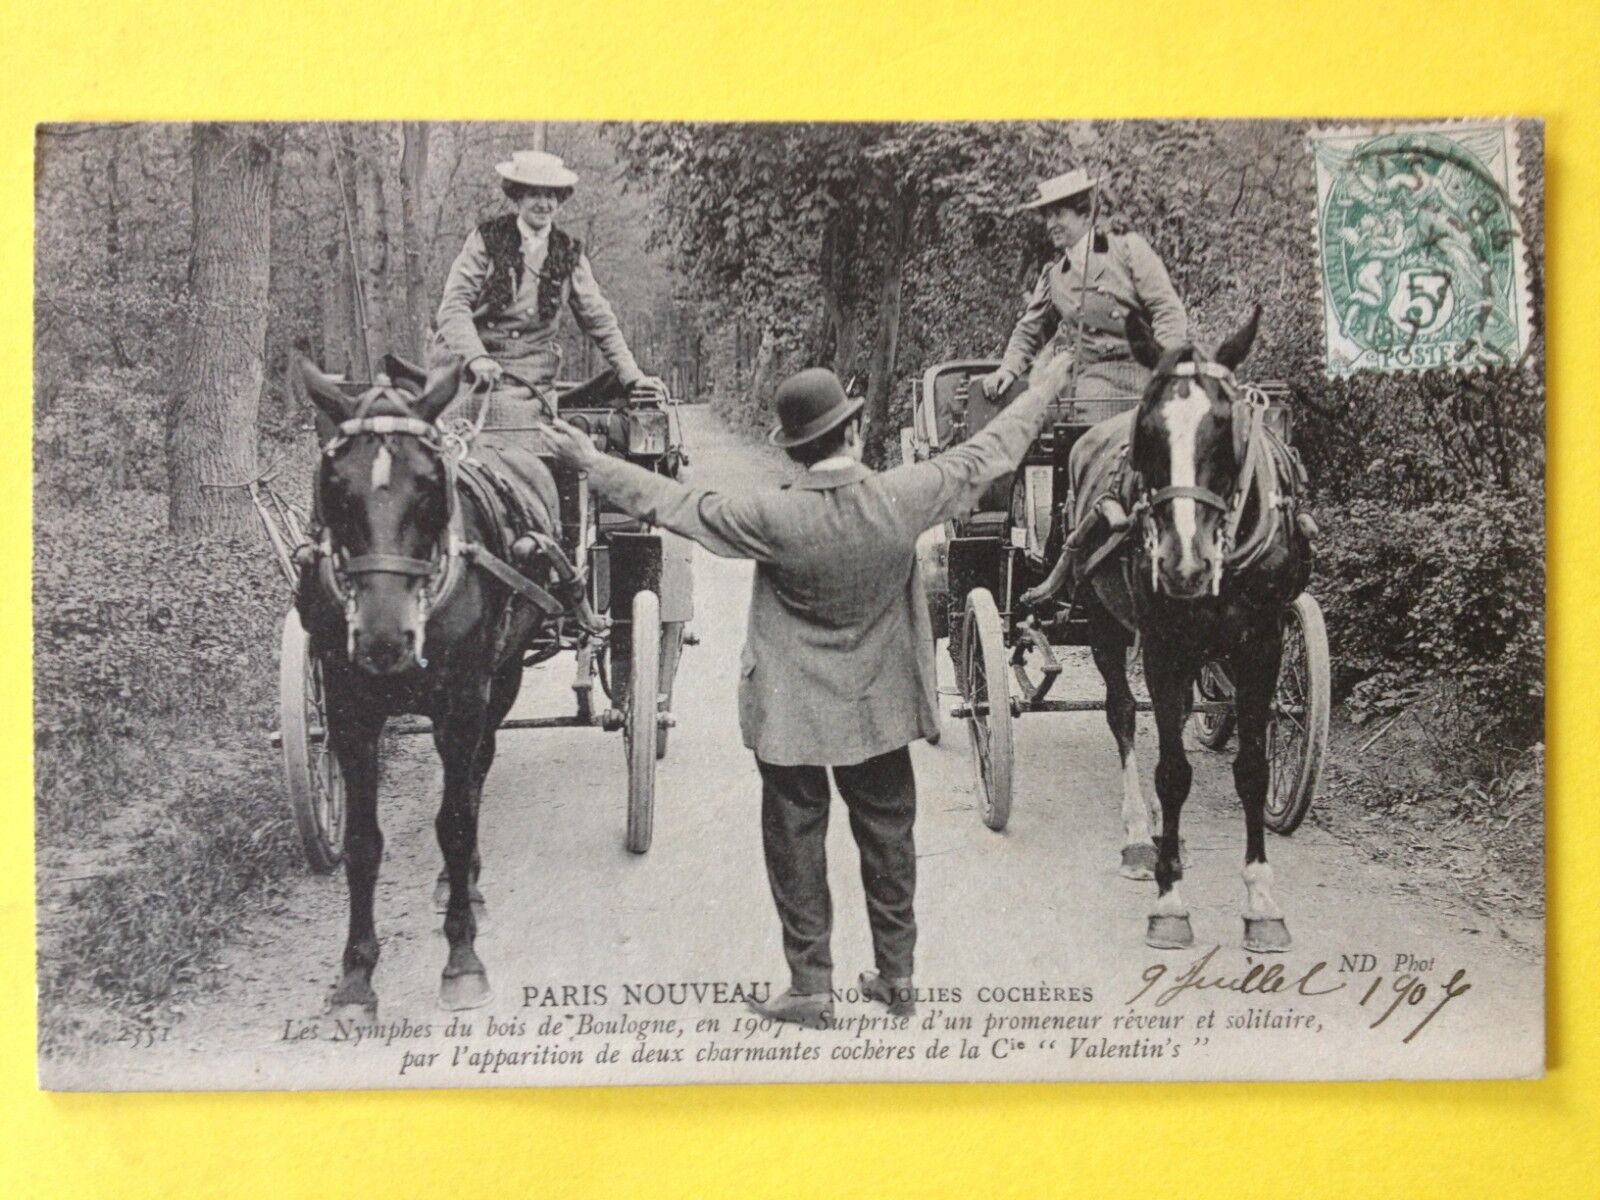 cpa PARIS in 1907 Our pretty cars horses TAXI HIPPOMOBILE horse-drawn taxi